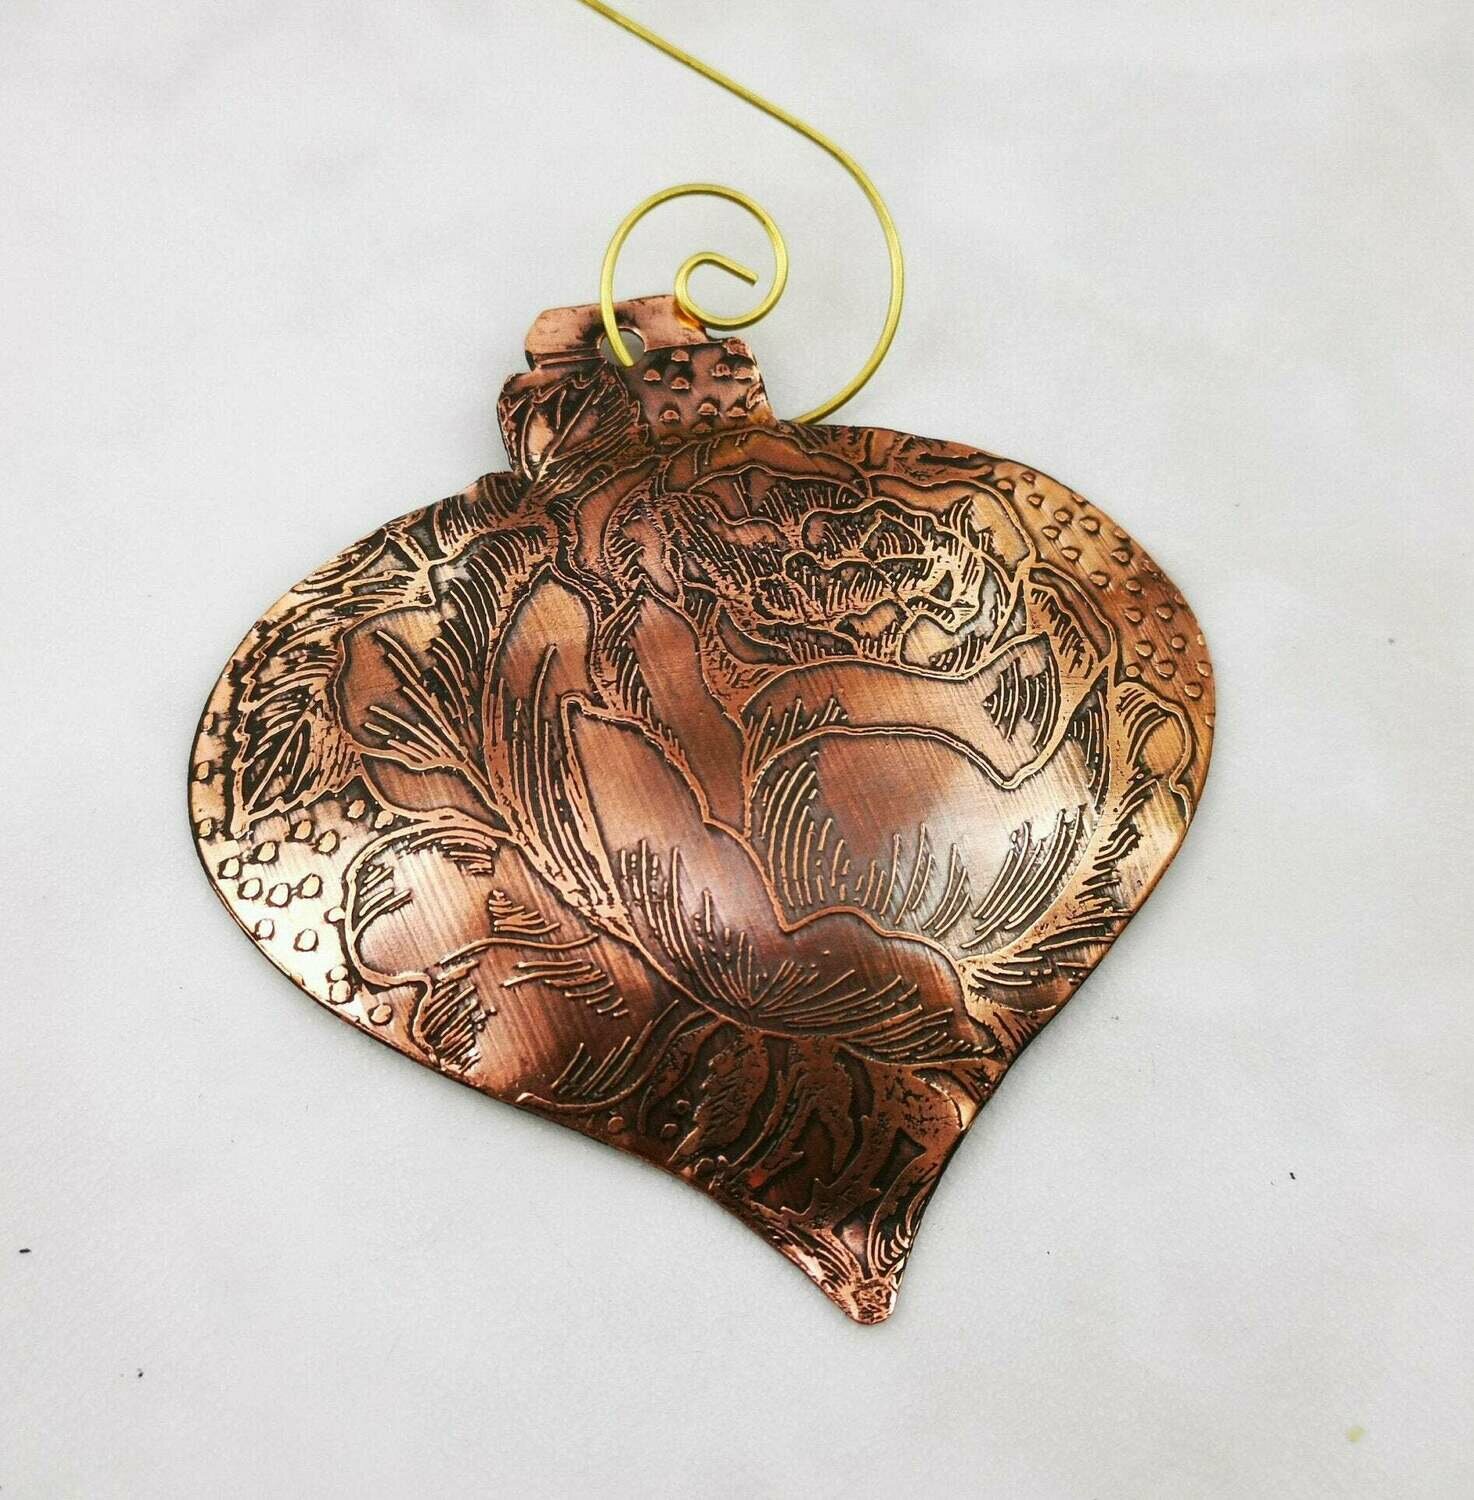 Patterned Copper Heart Home Decor Ornament